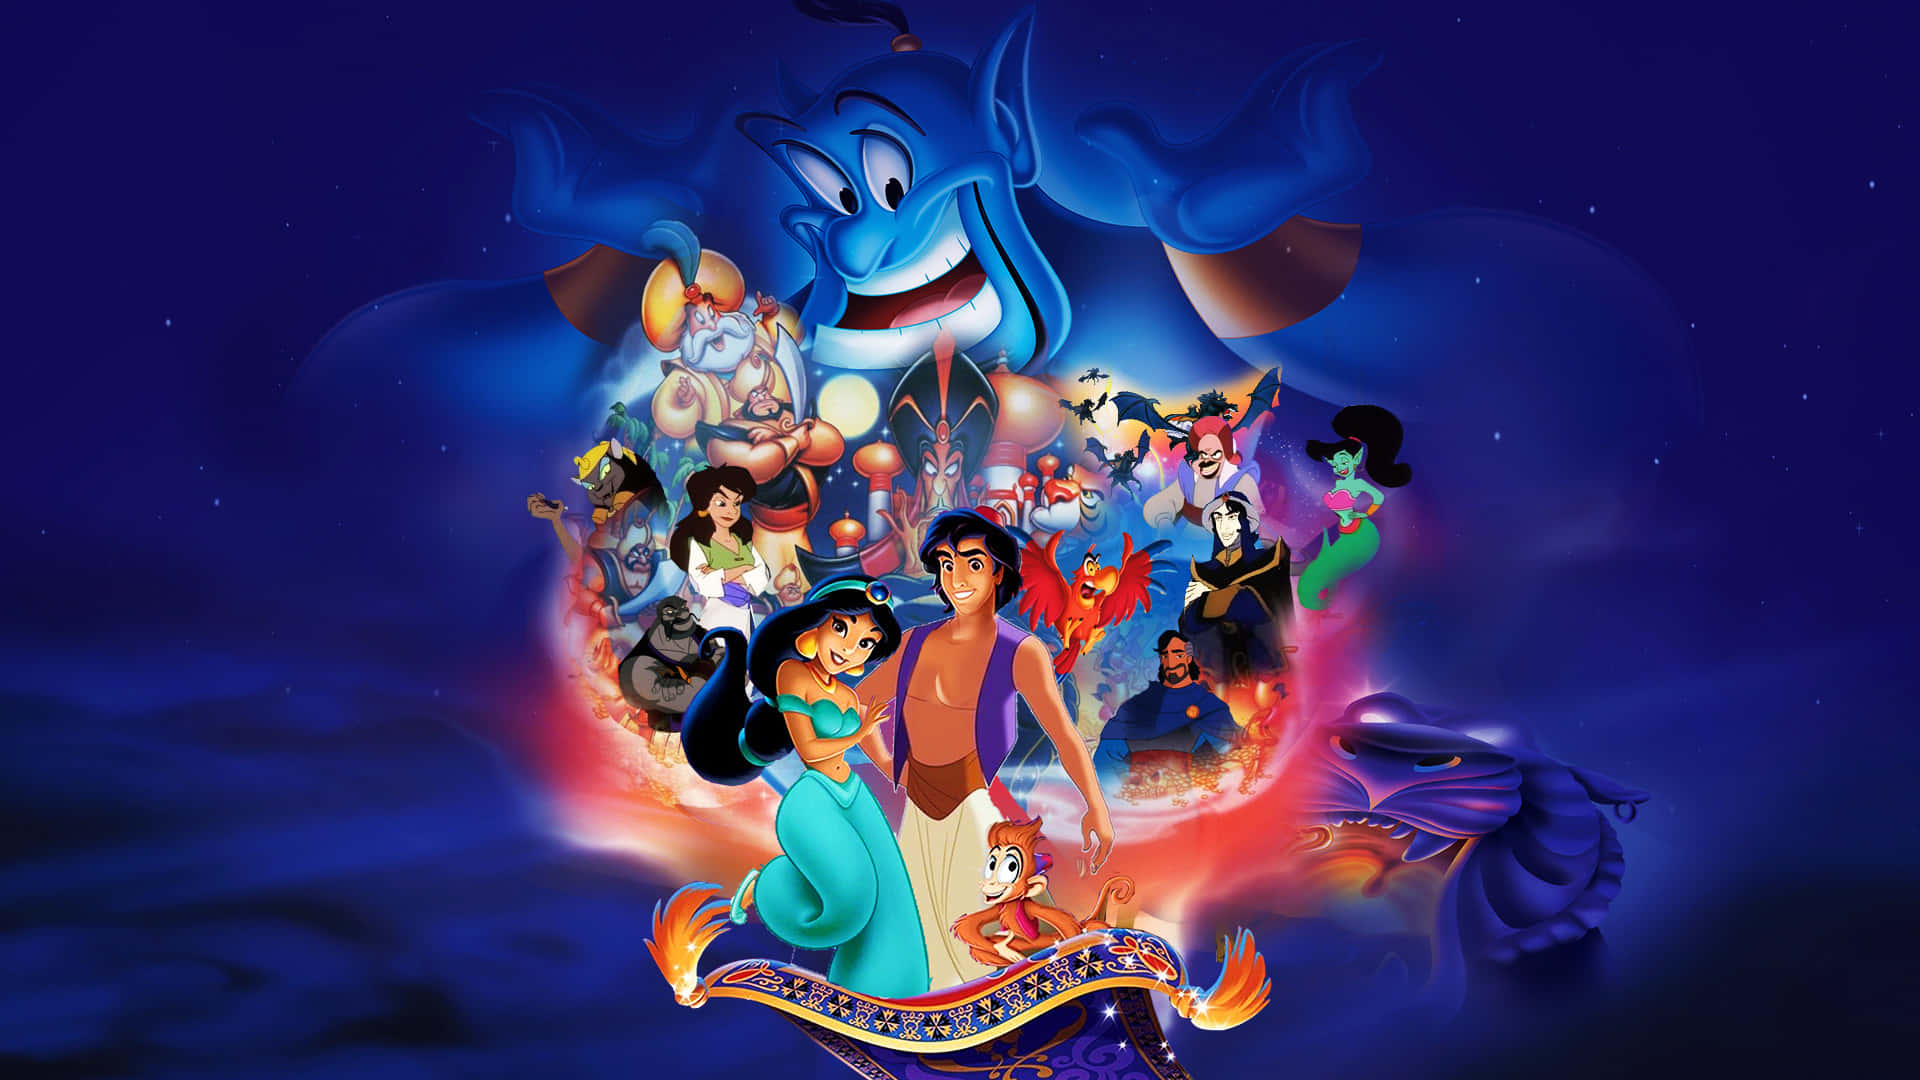 'A magical journey awaits with Aladdin'